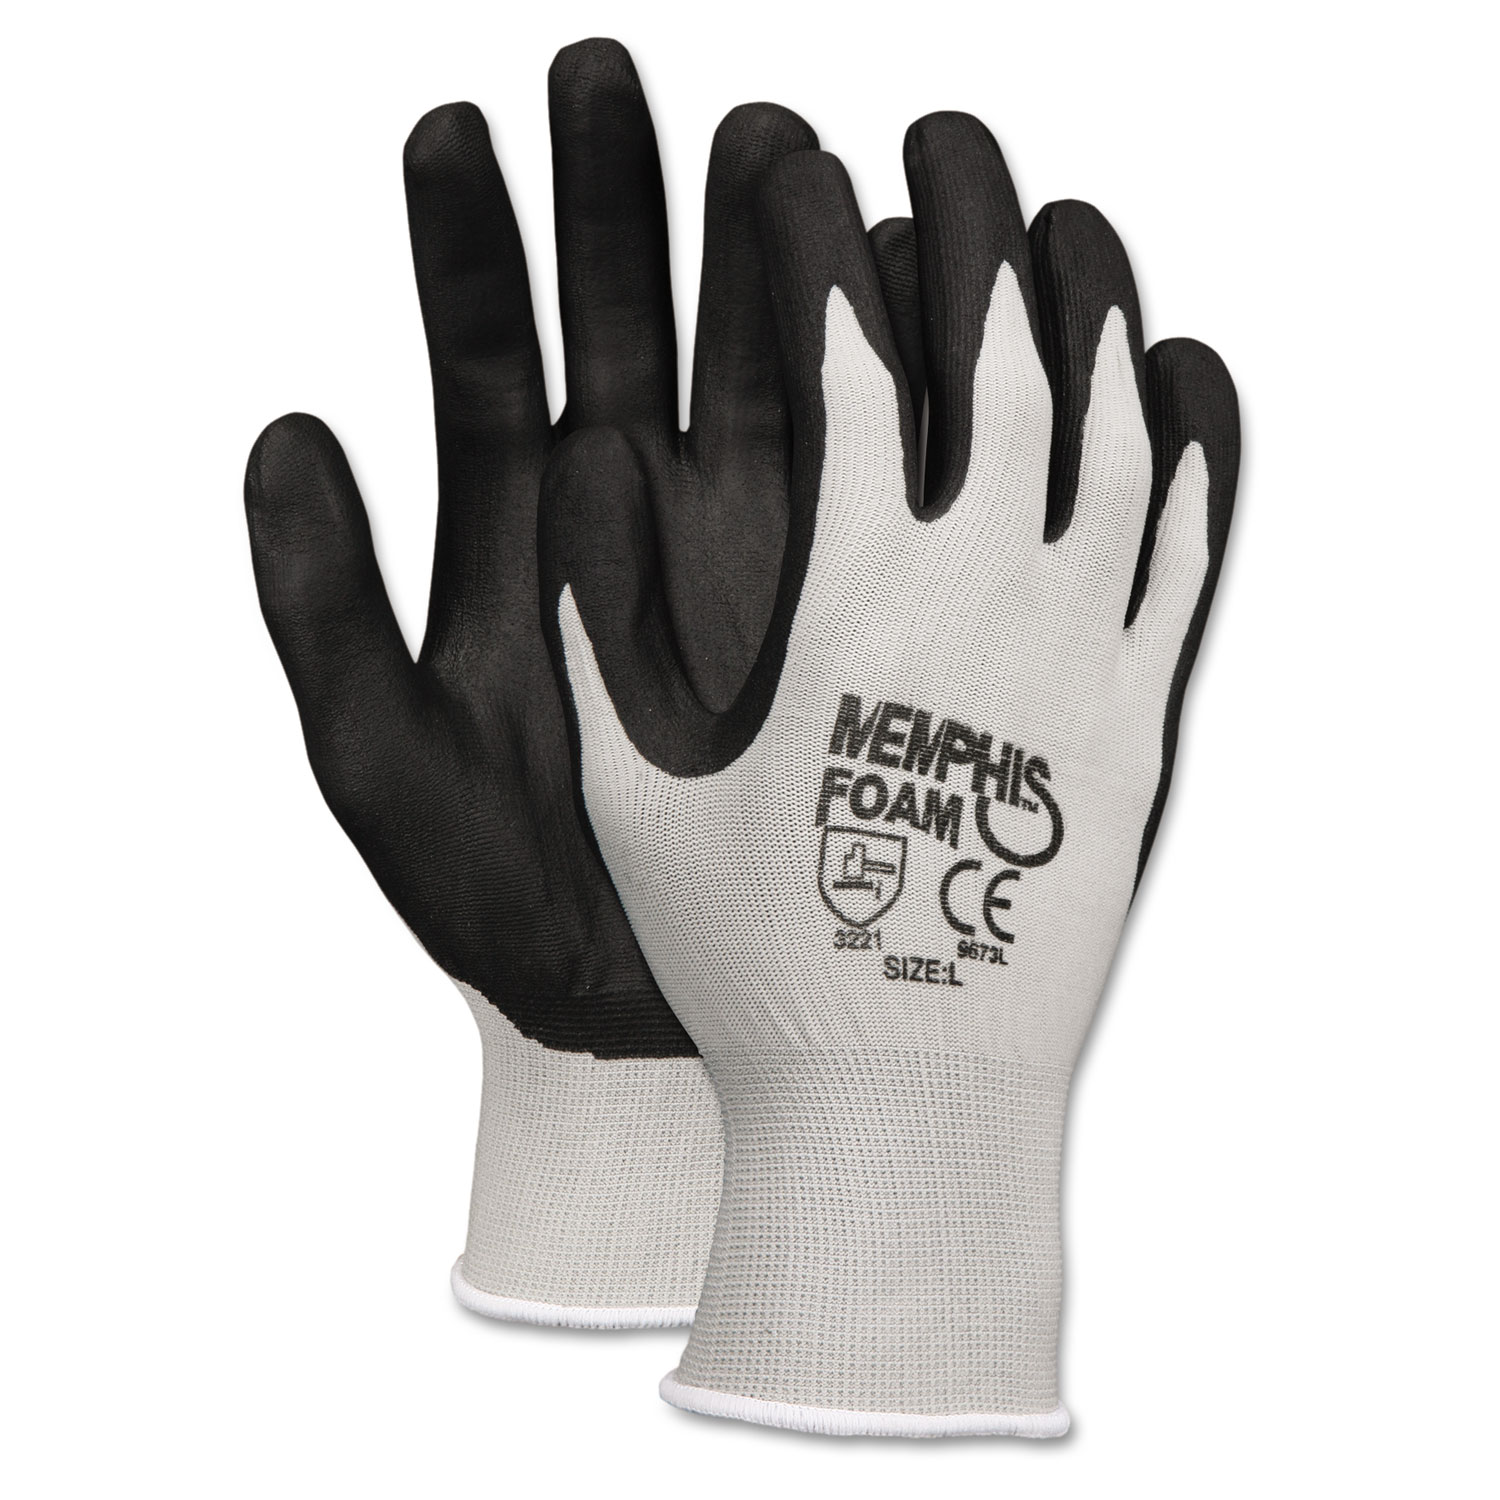  MCR Safety 9673XL Economy Foam Nitrile Gloves, X-Large, Gray/Black, 12 Pairs (CRW9673XL) 